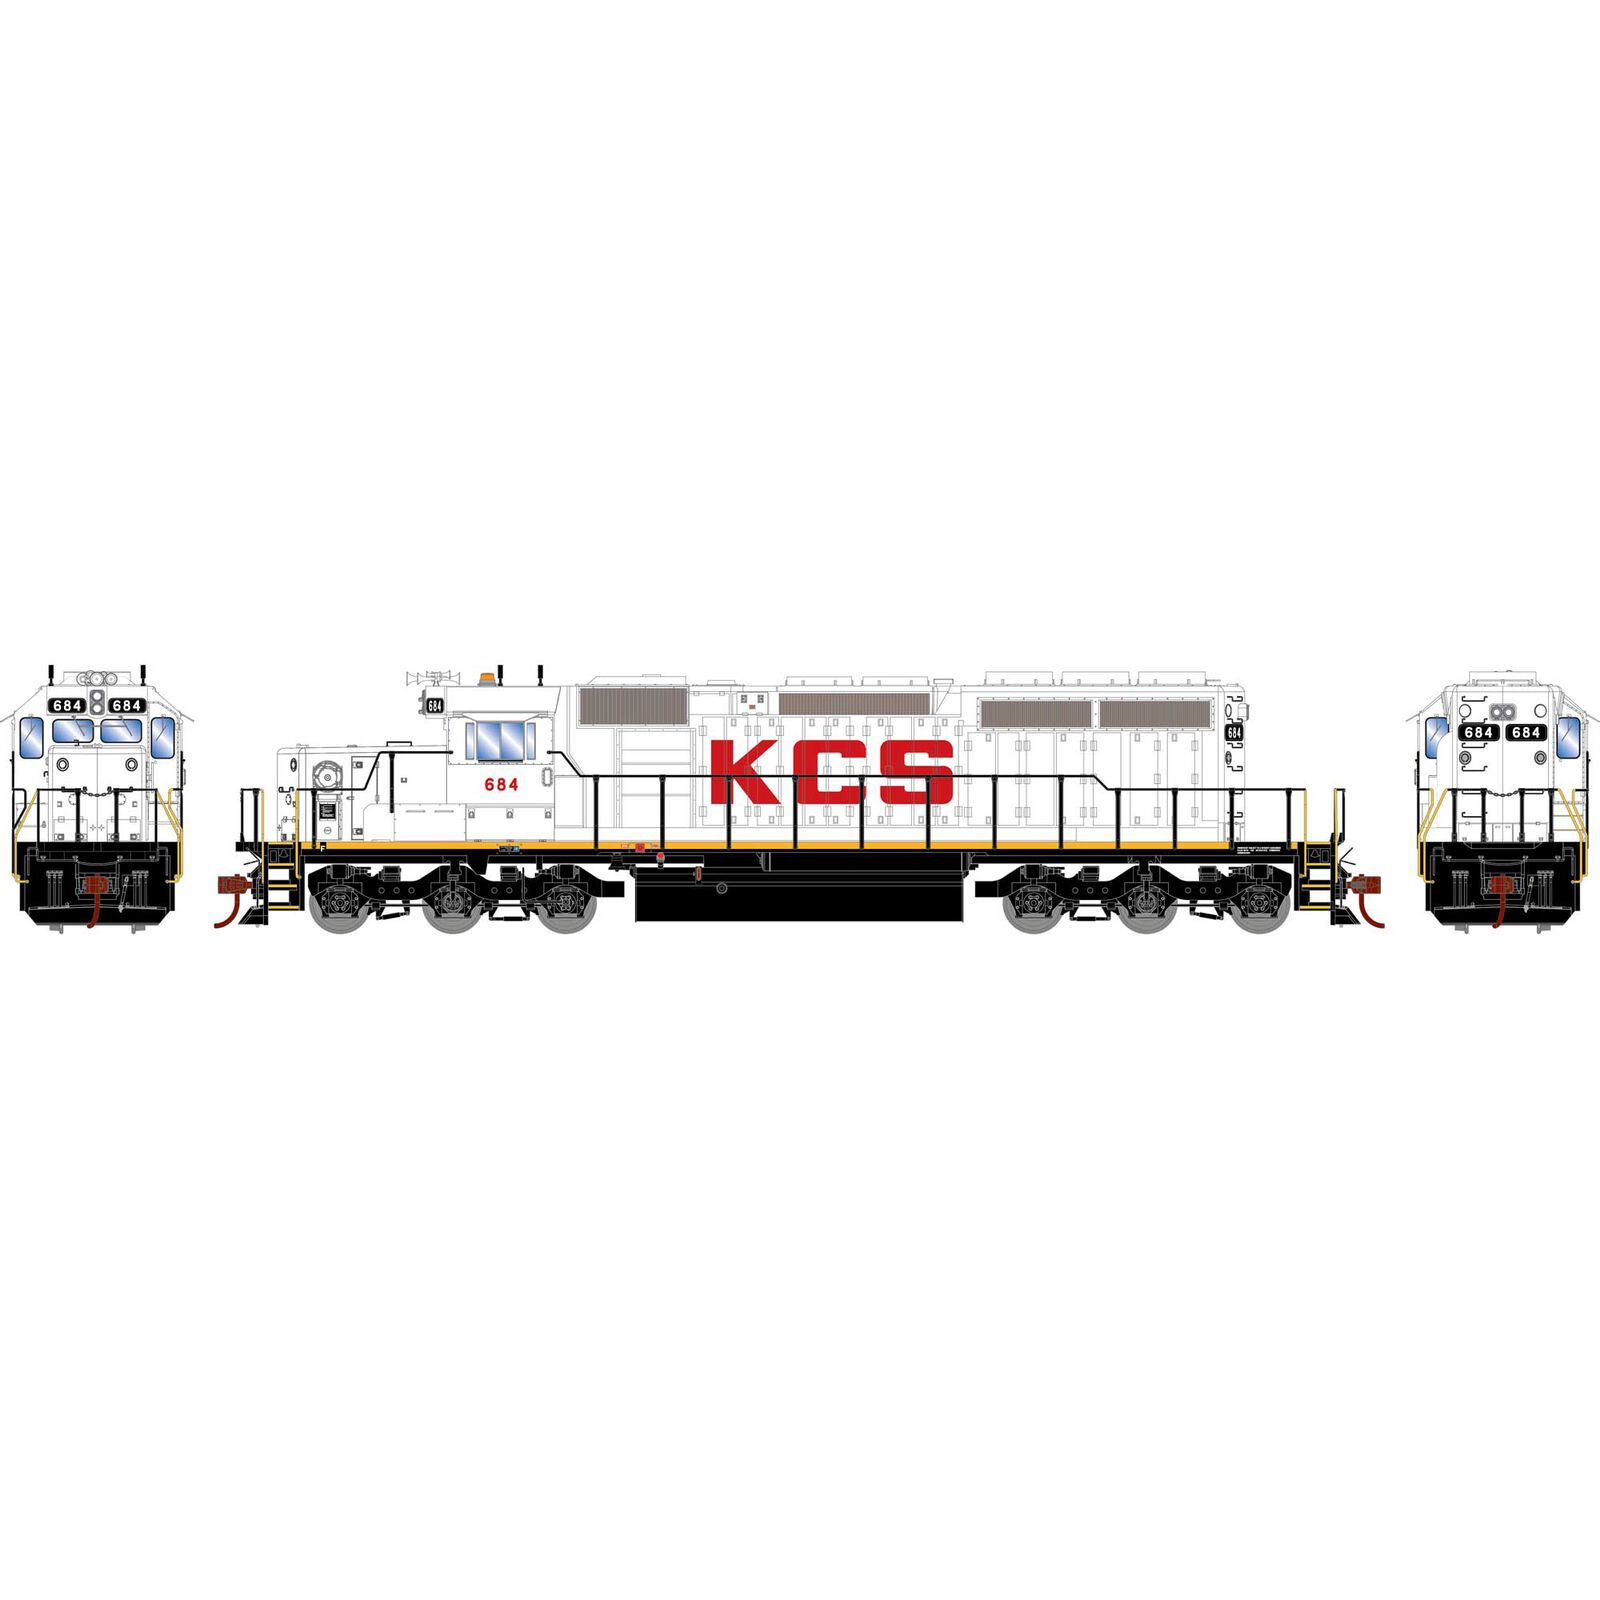 HO EMD SD40-2 Locomotive, KCS #684